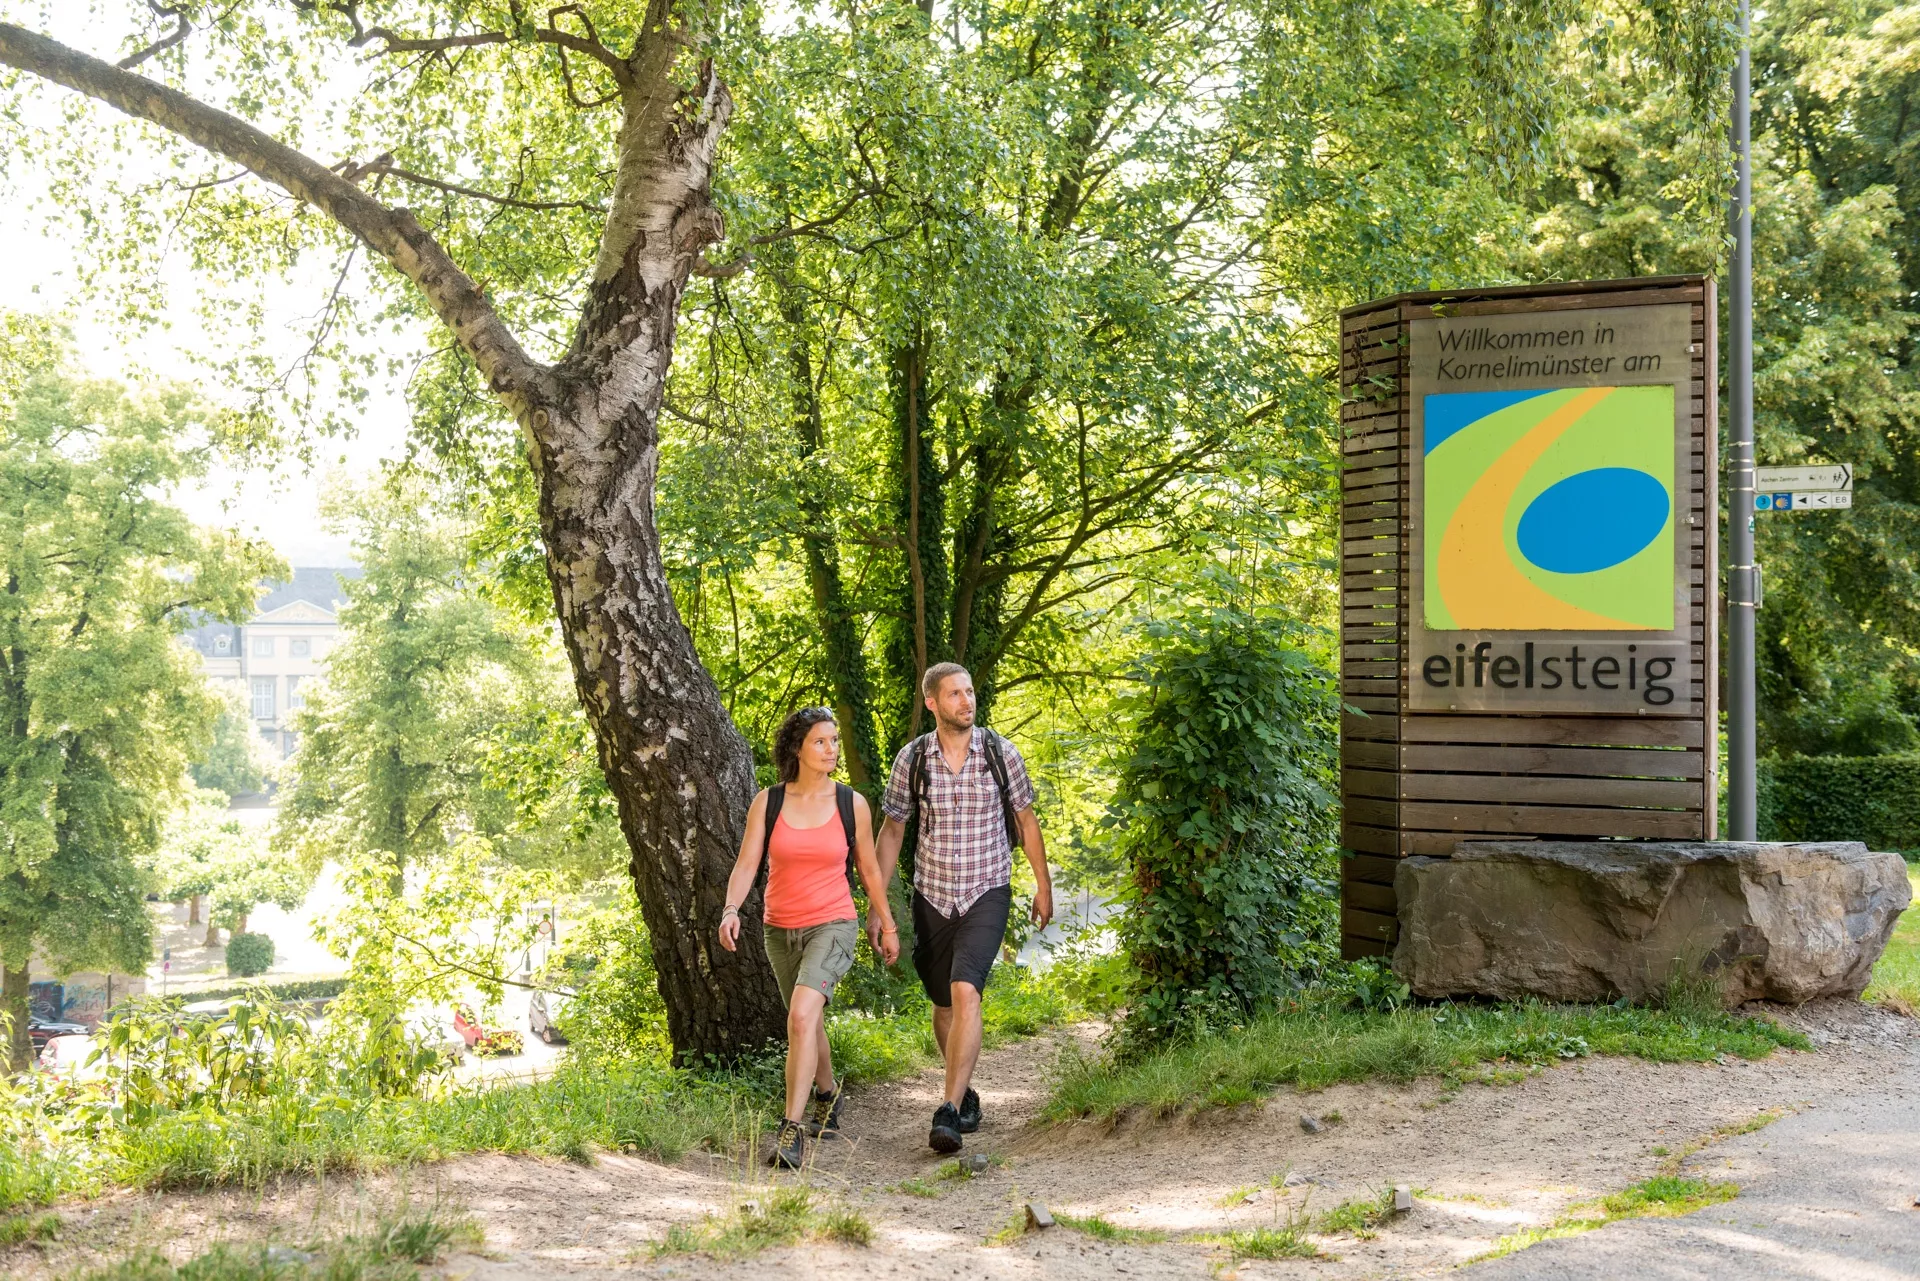 Eifelsteig Trail in Germany, Europe | Trekking & Hiking - Rated 0.7